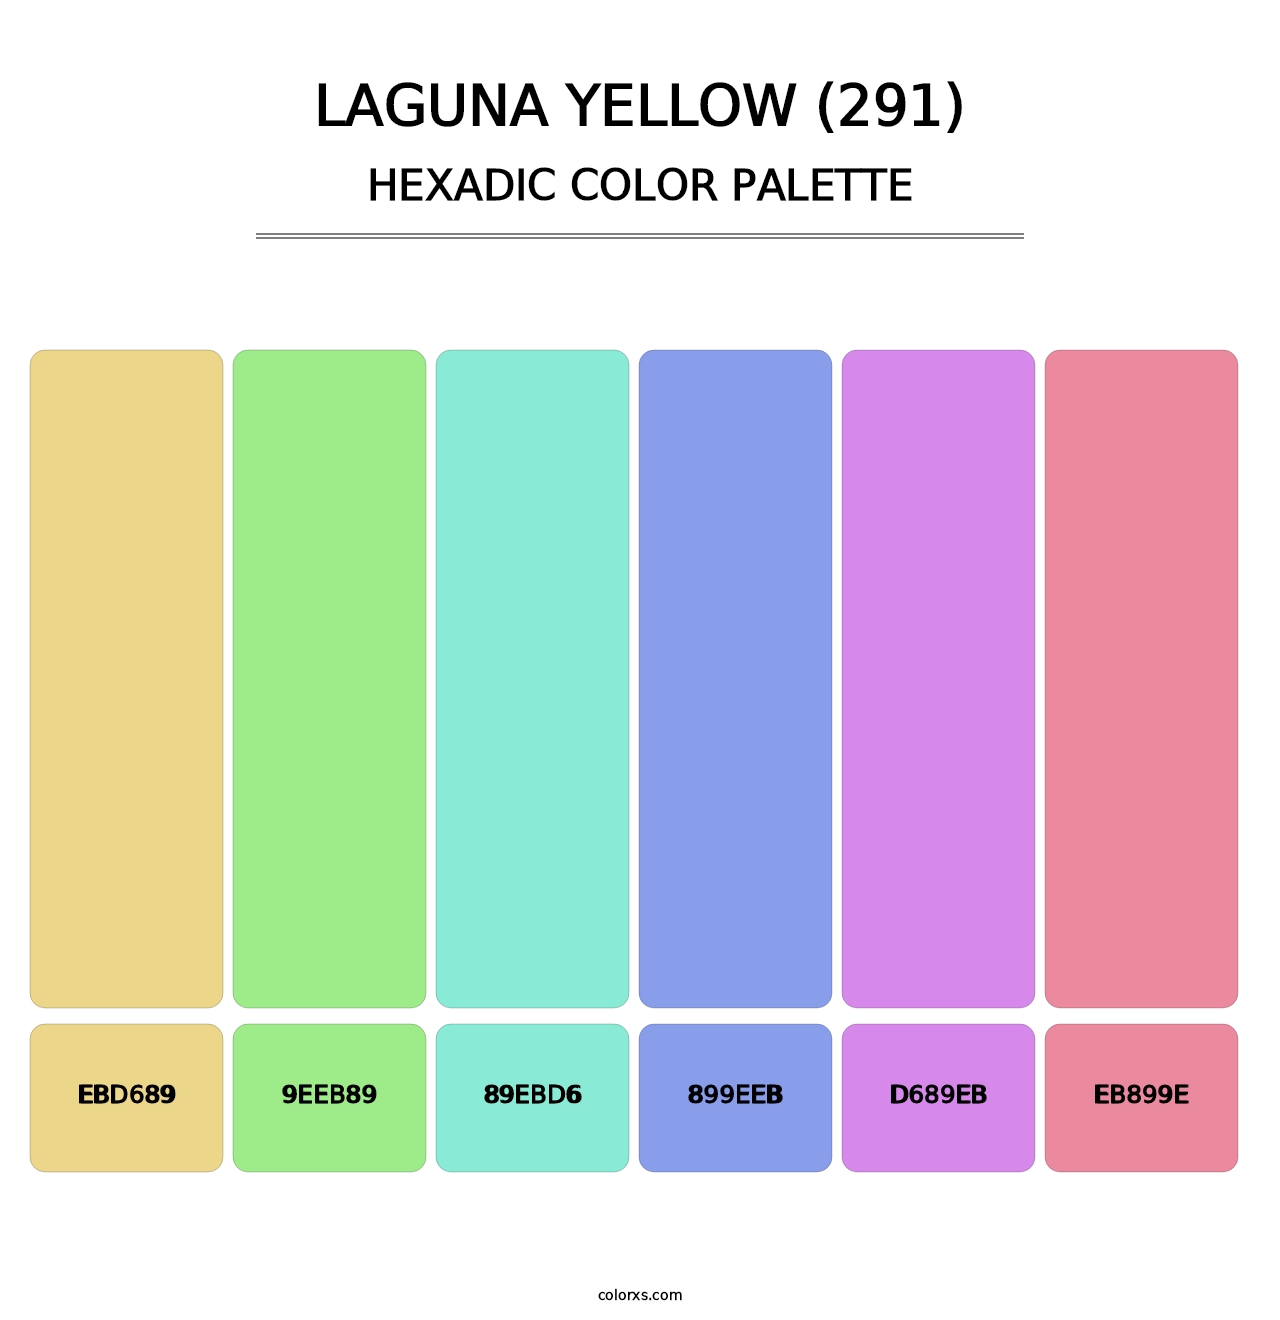 Laguna Yellow (291) - Hexadic Color Palette